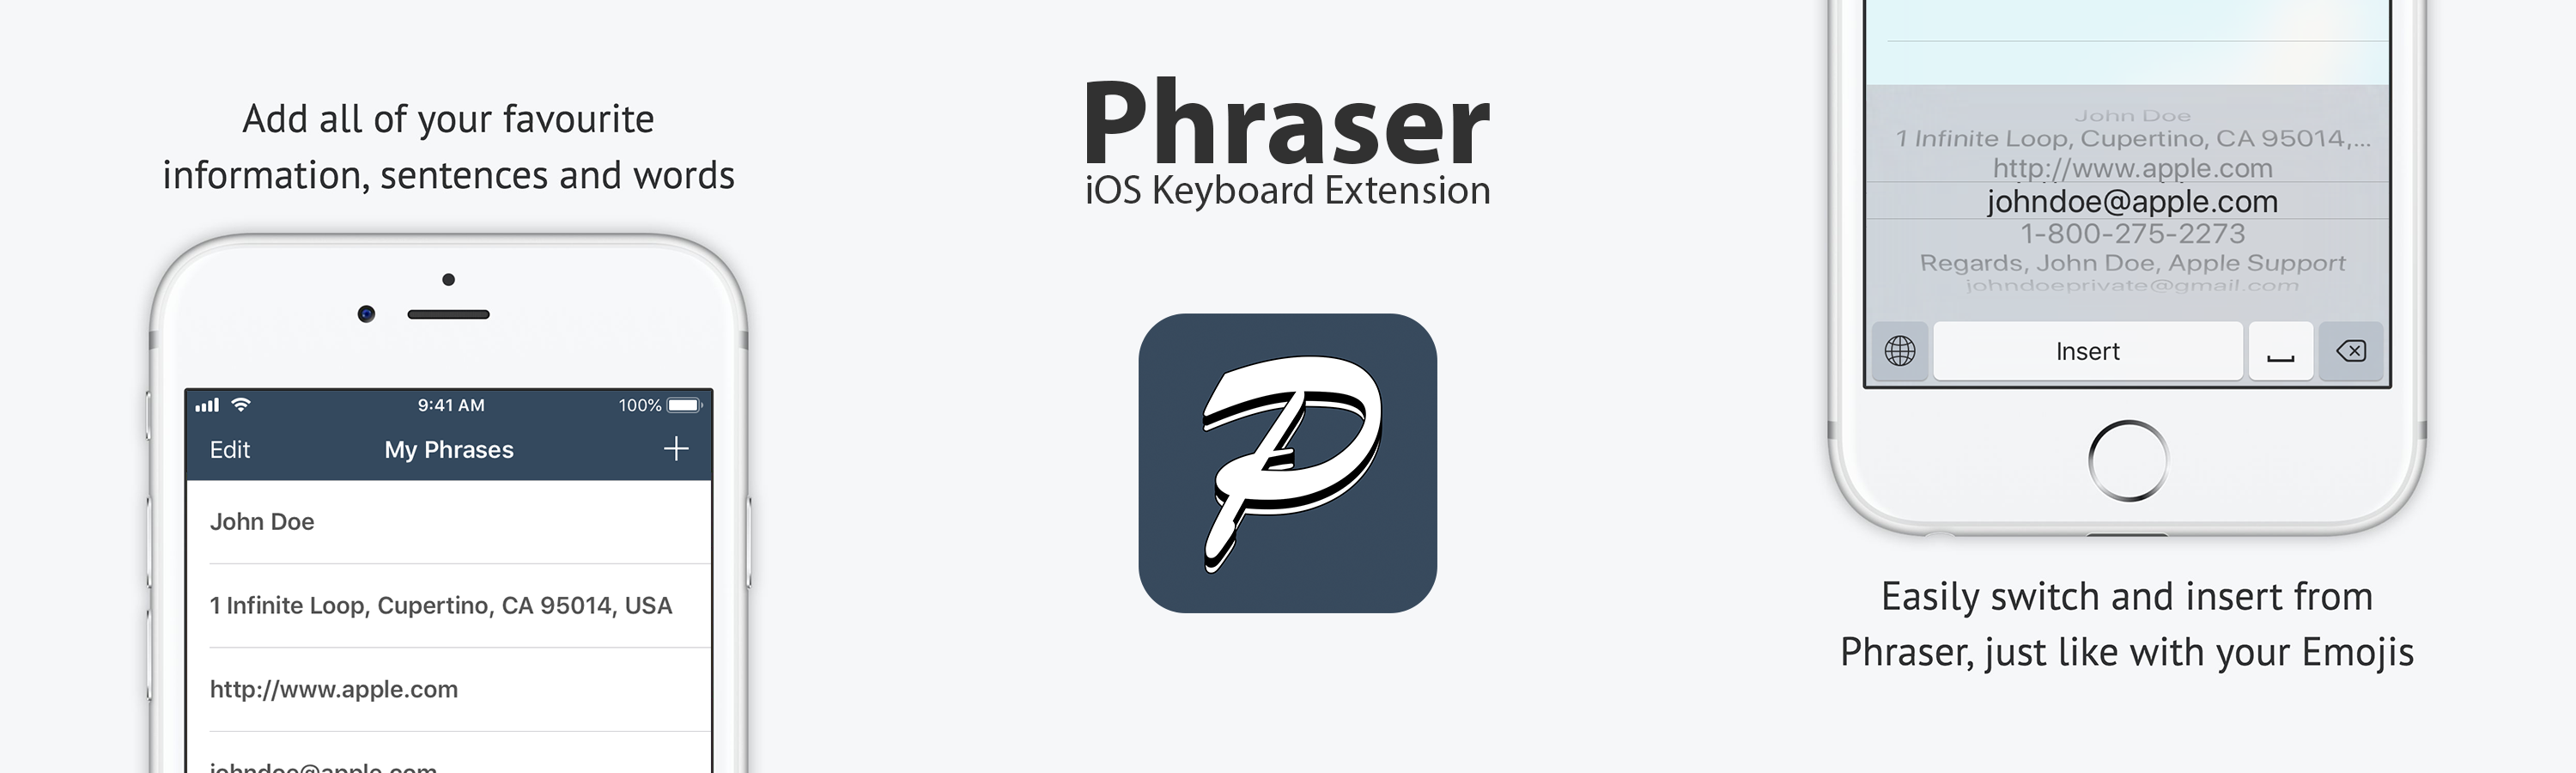 Phraser iOS Keyboard Extension by Casper Riboe